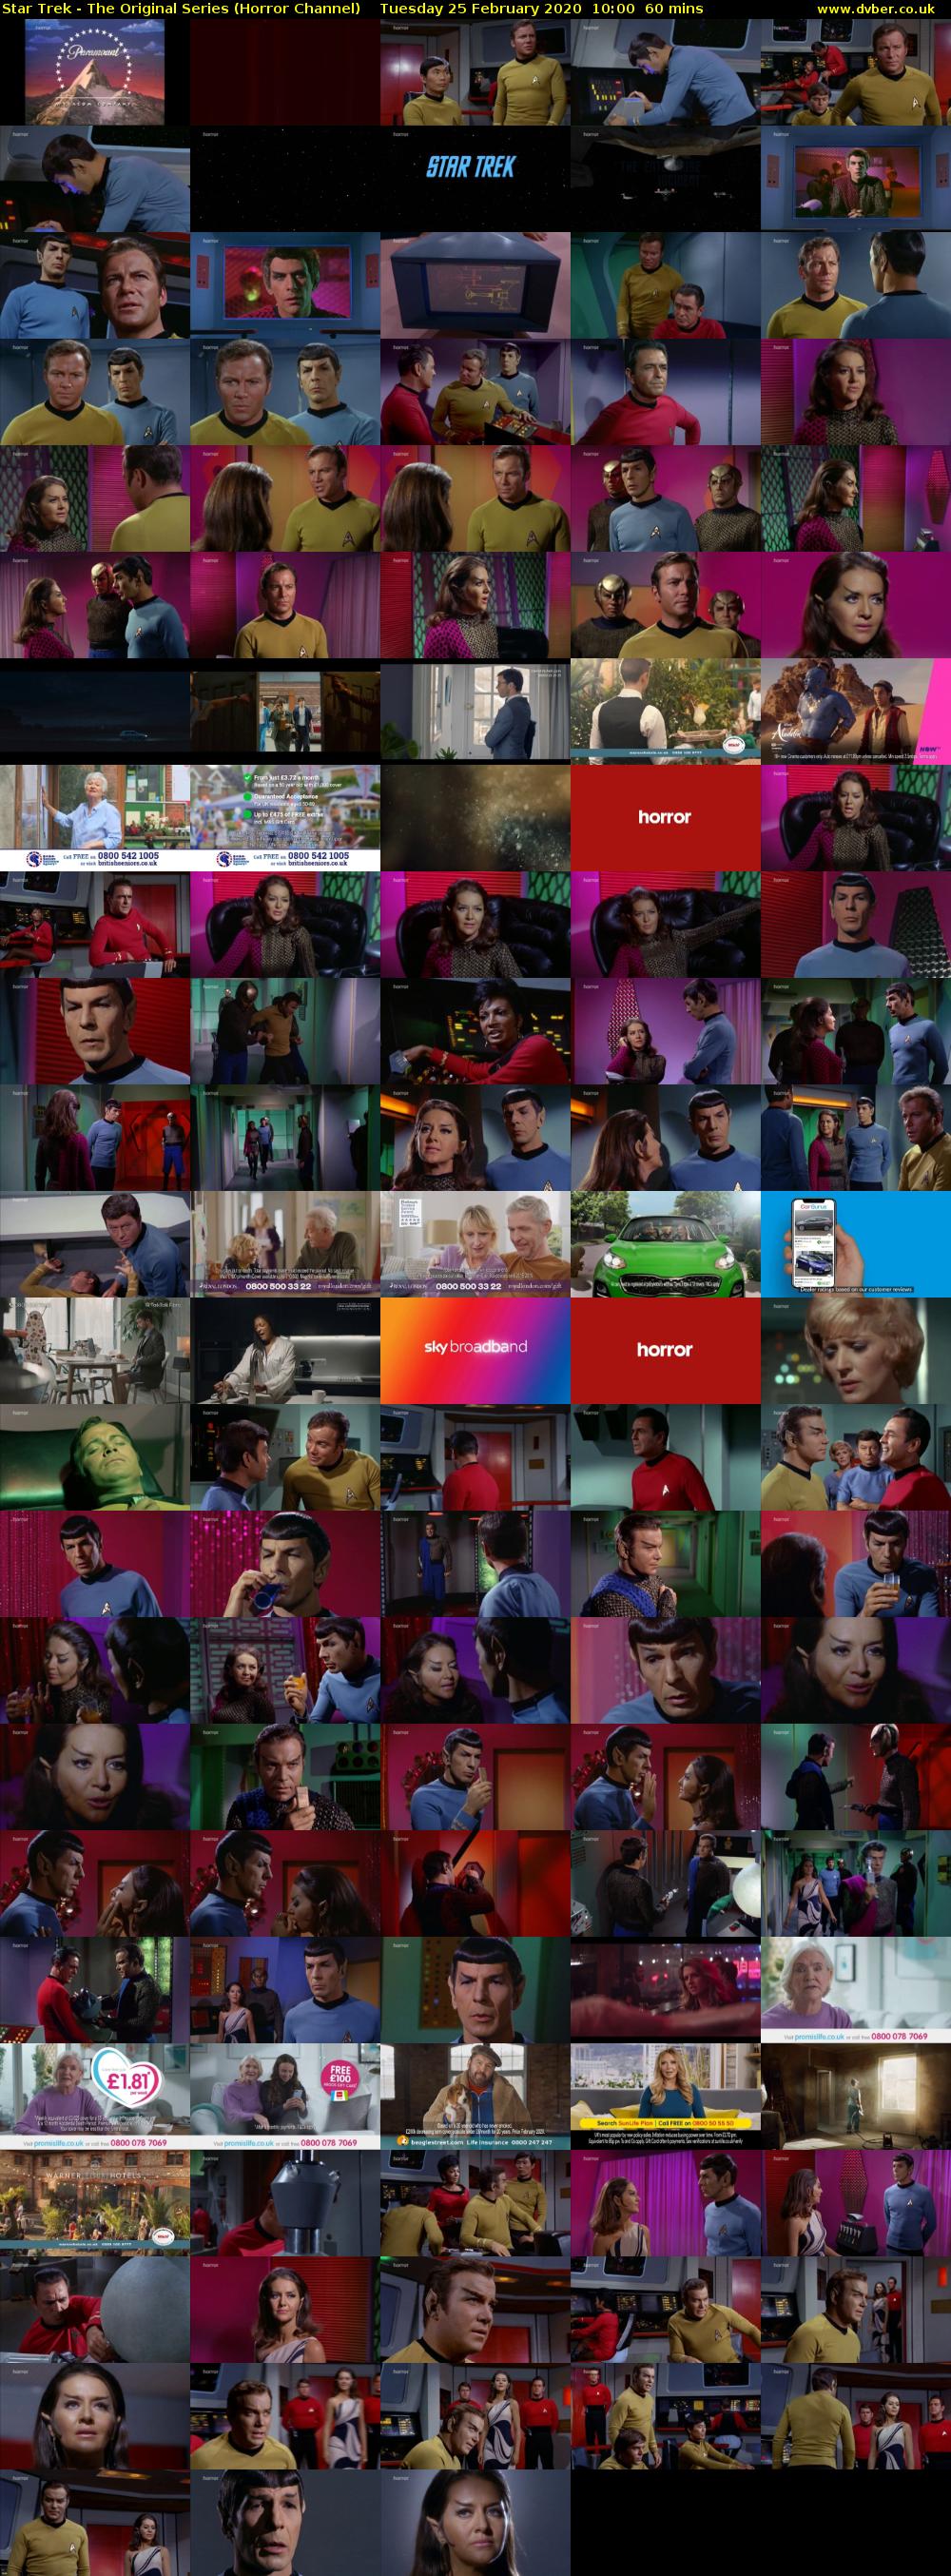 Star Trek - The Original Series (Horror Channel) Tuesday 25 February 2020 10:00 - 11:00